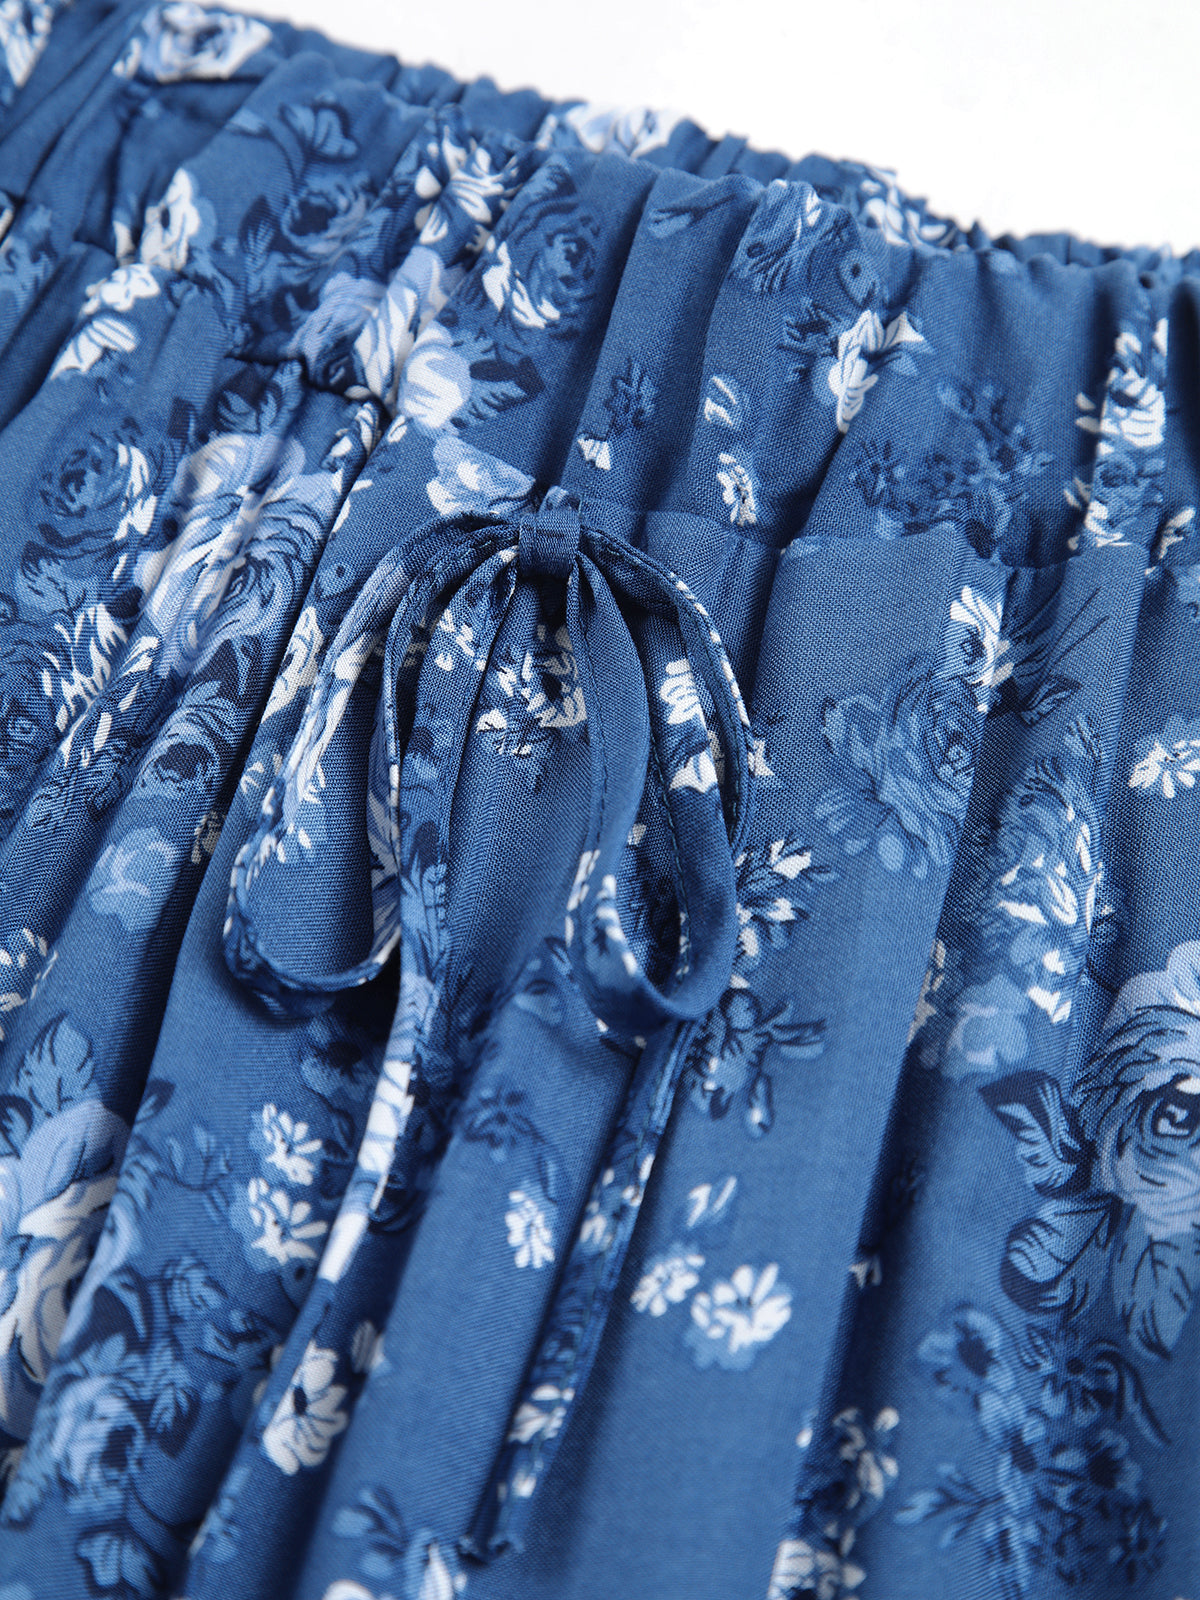 Floral Printed Tie-Waist Maxi Skirt